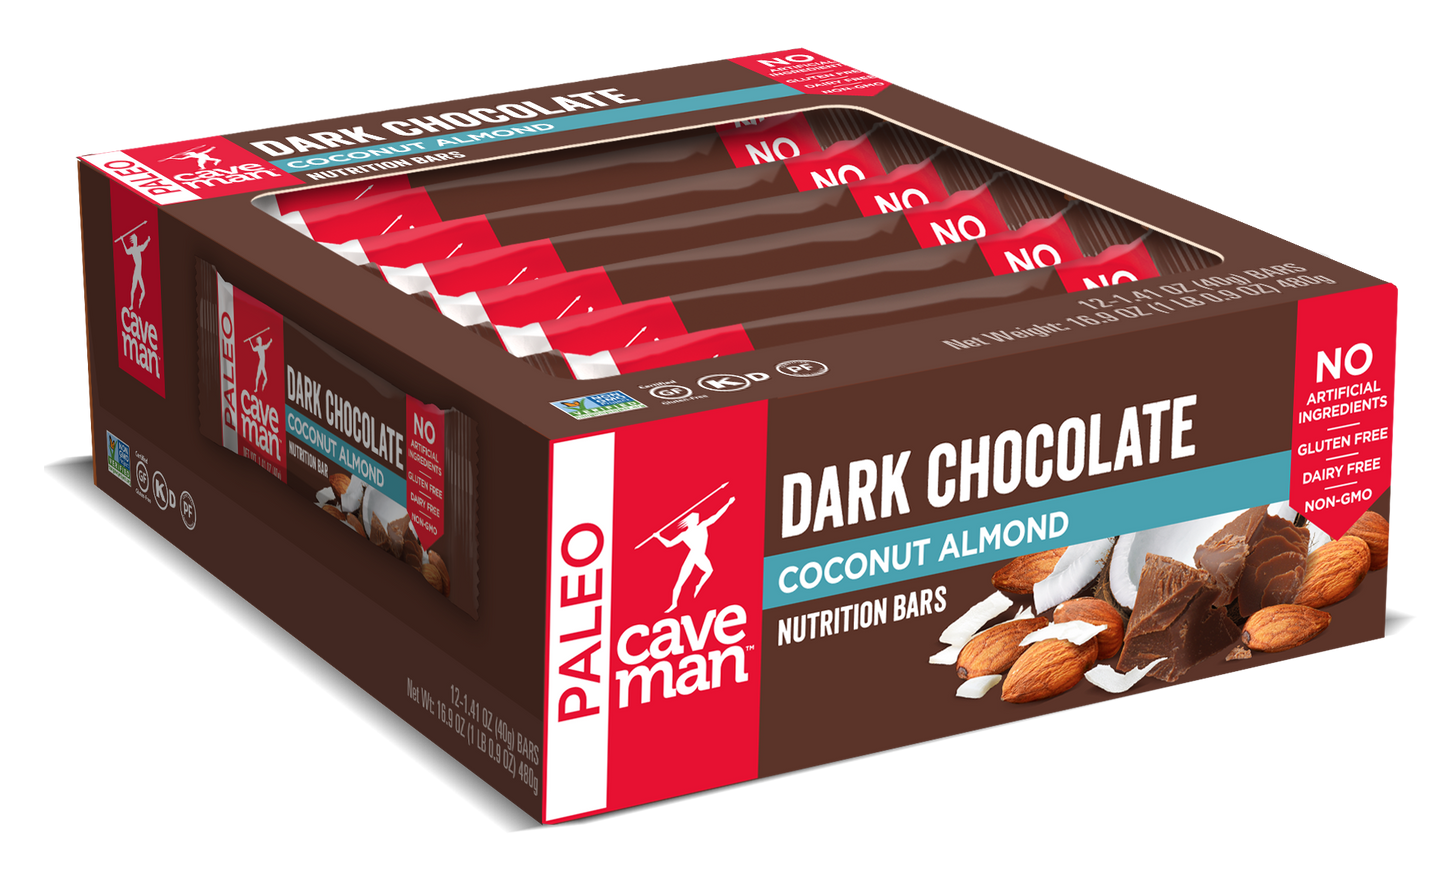 Dark Chocolate Almond Coconut Nutrition Bars